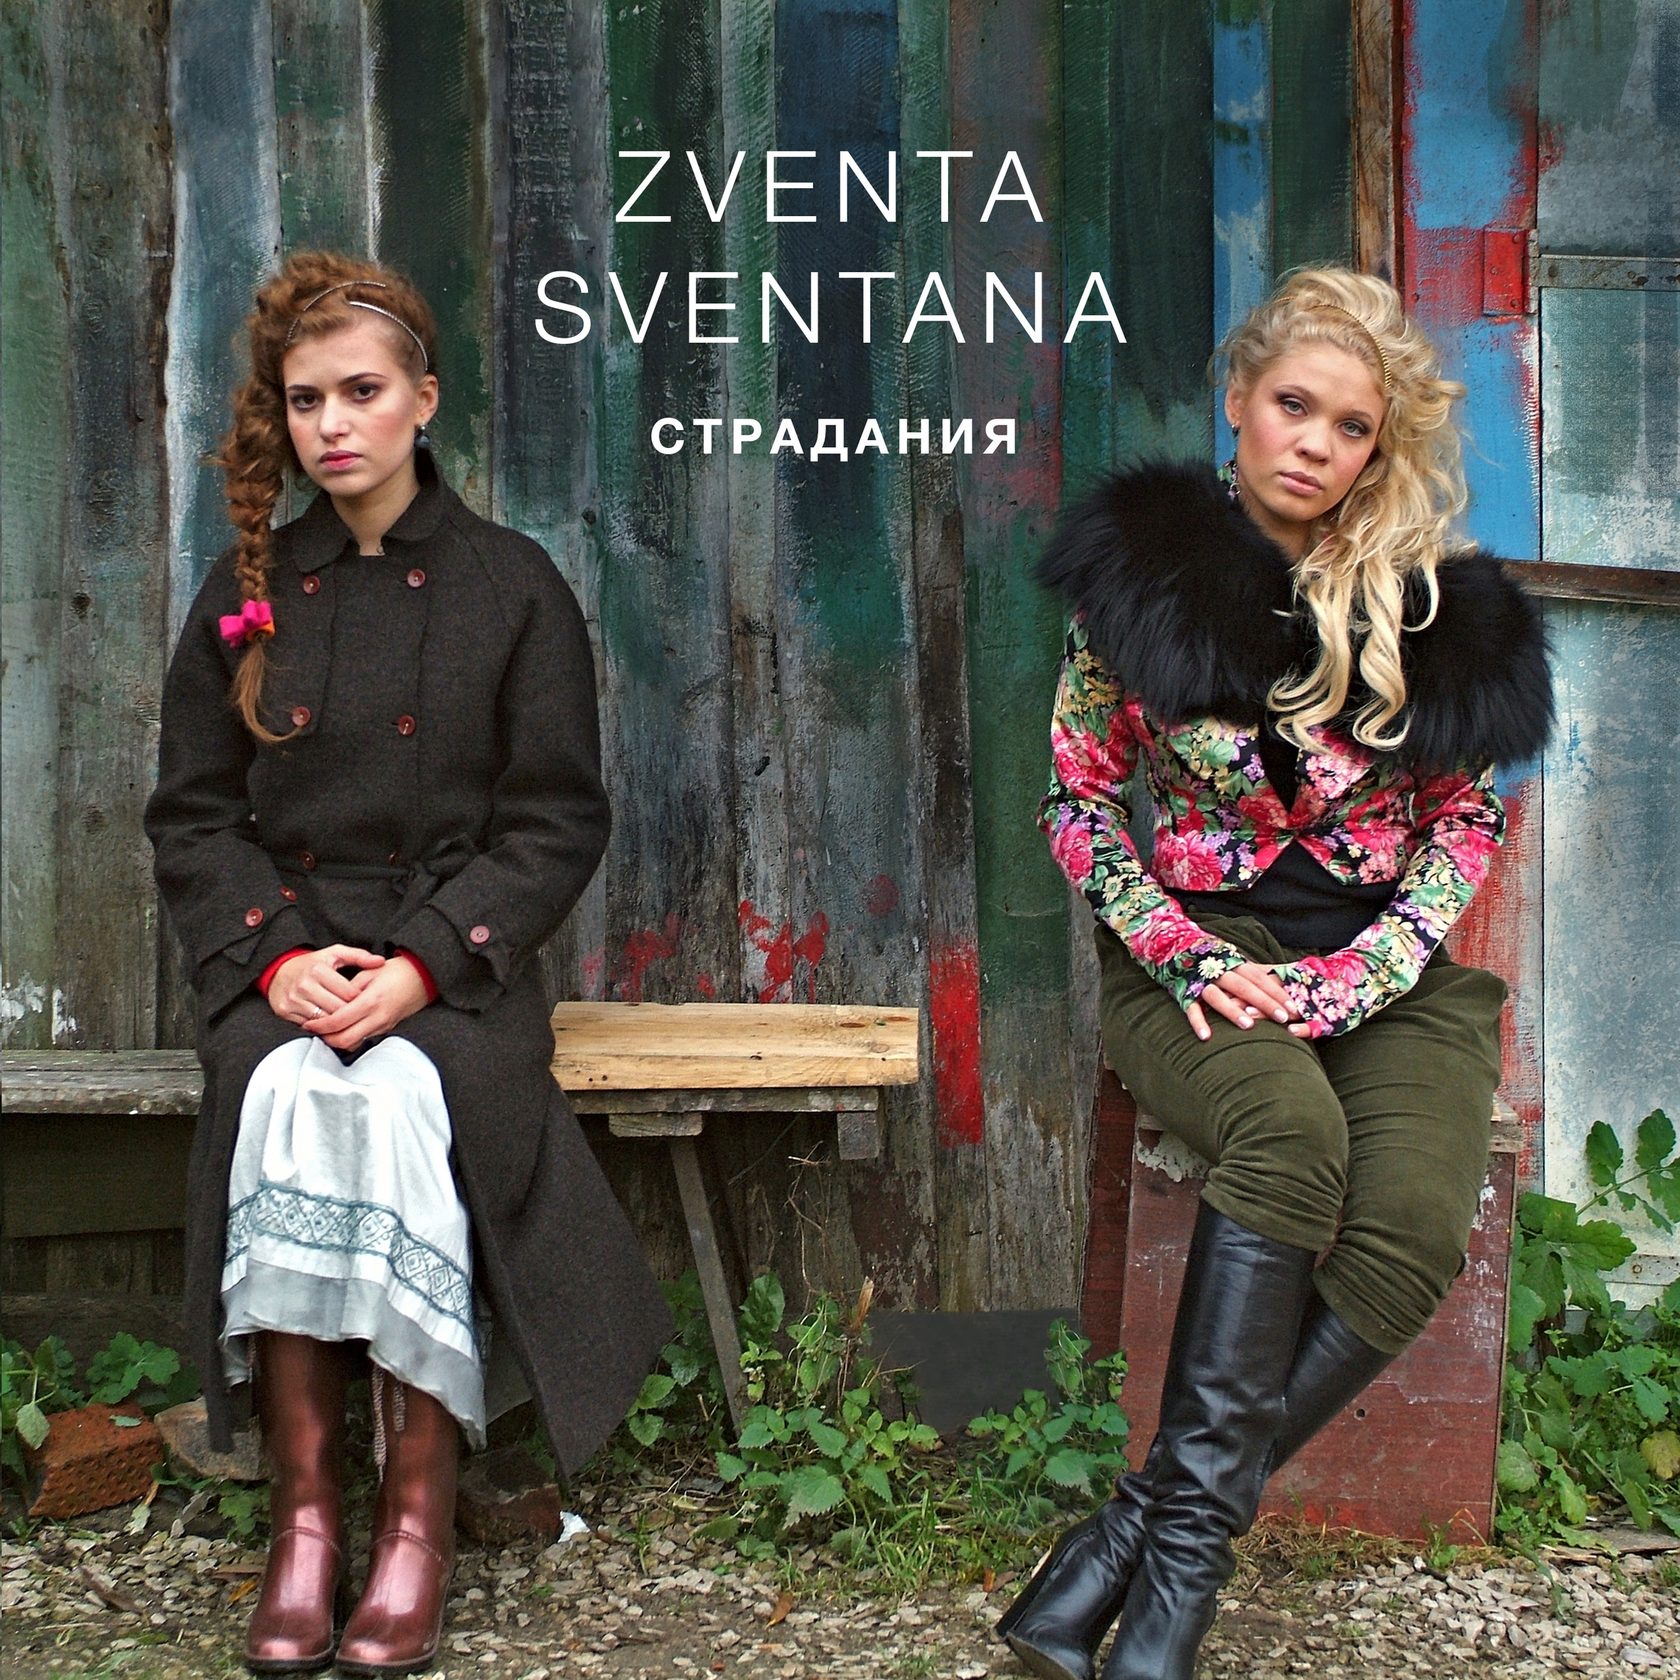 Zventa Sventana - Старадания (2006)